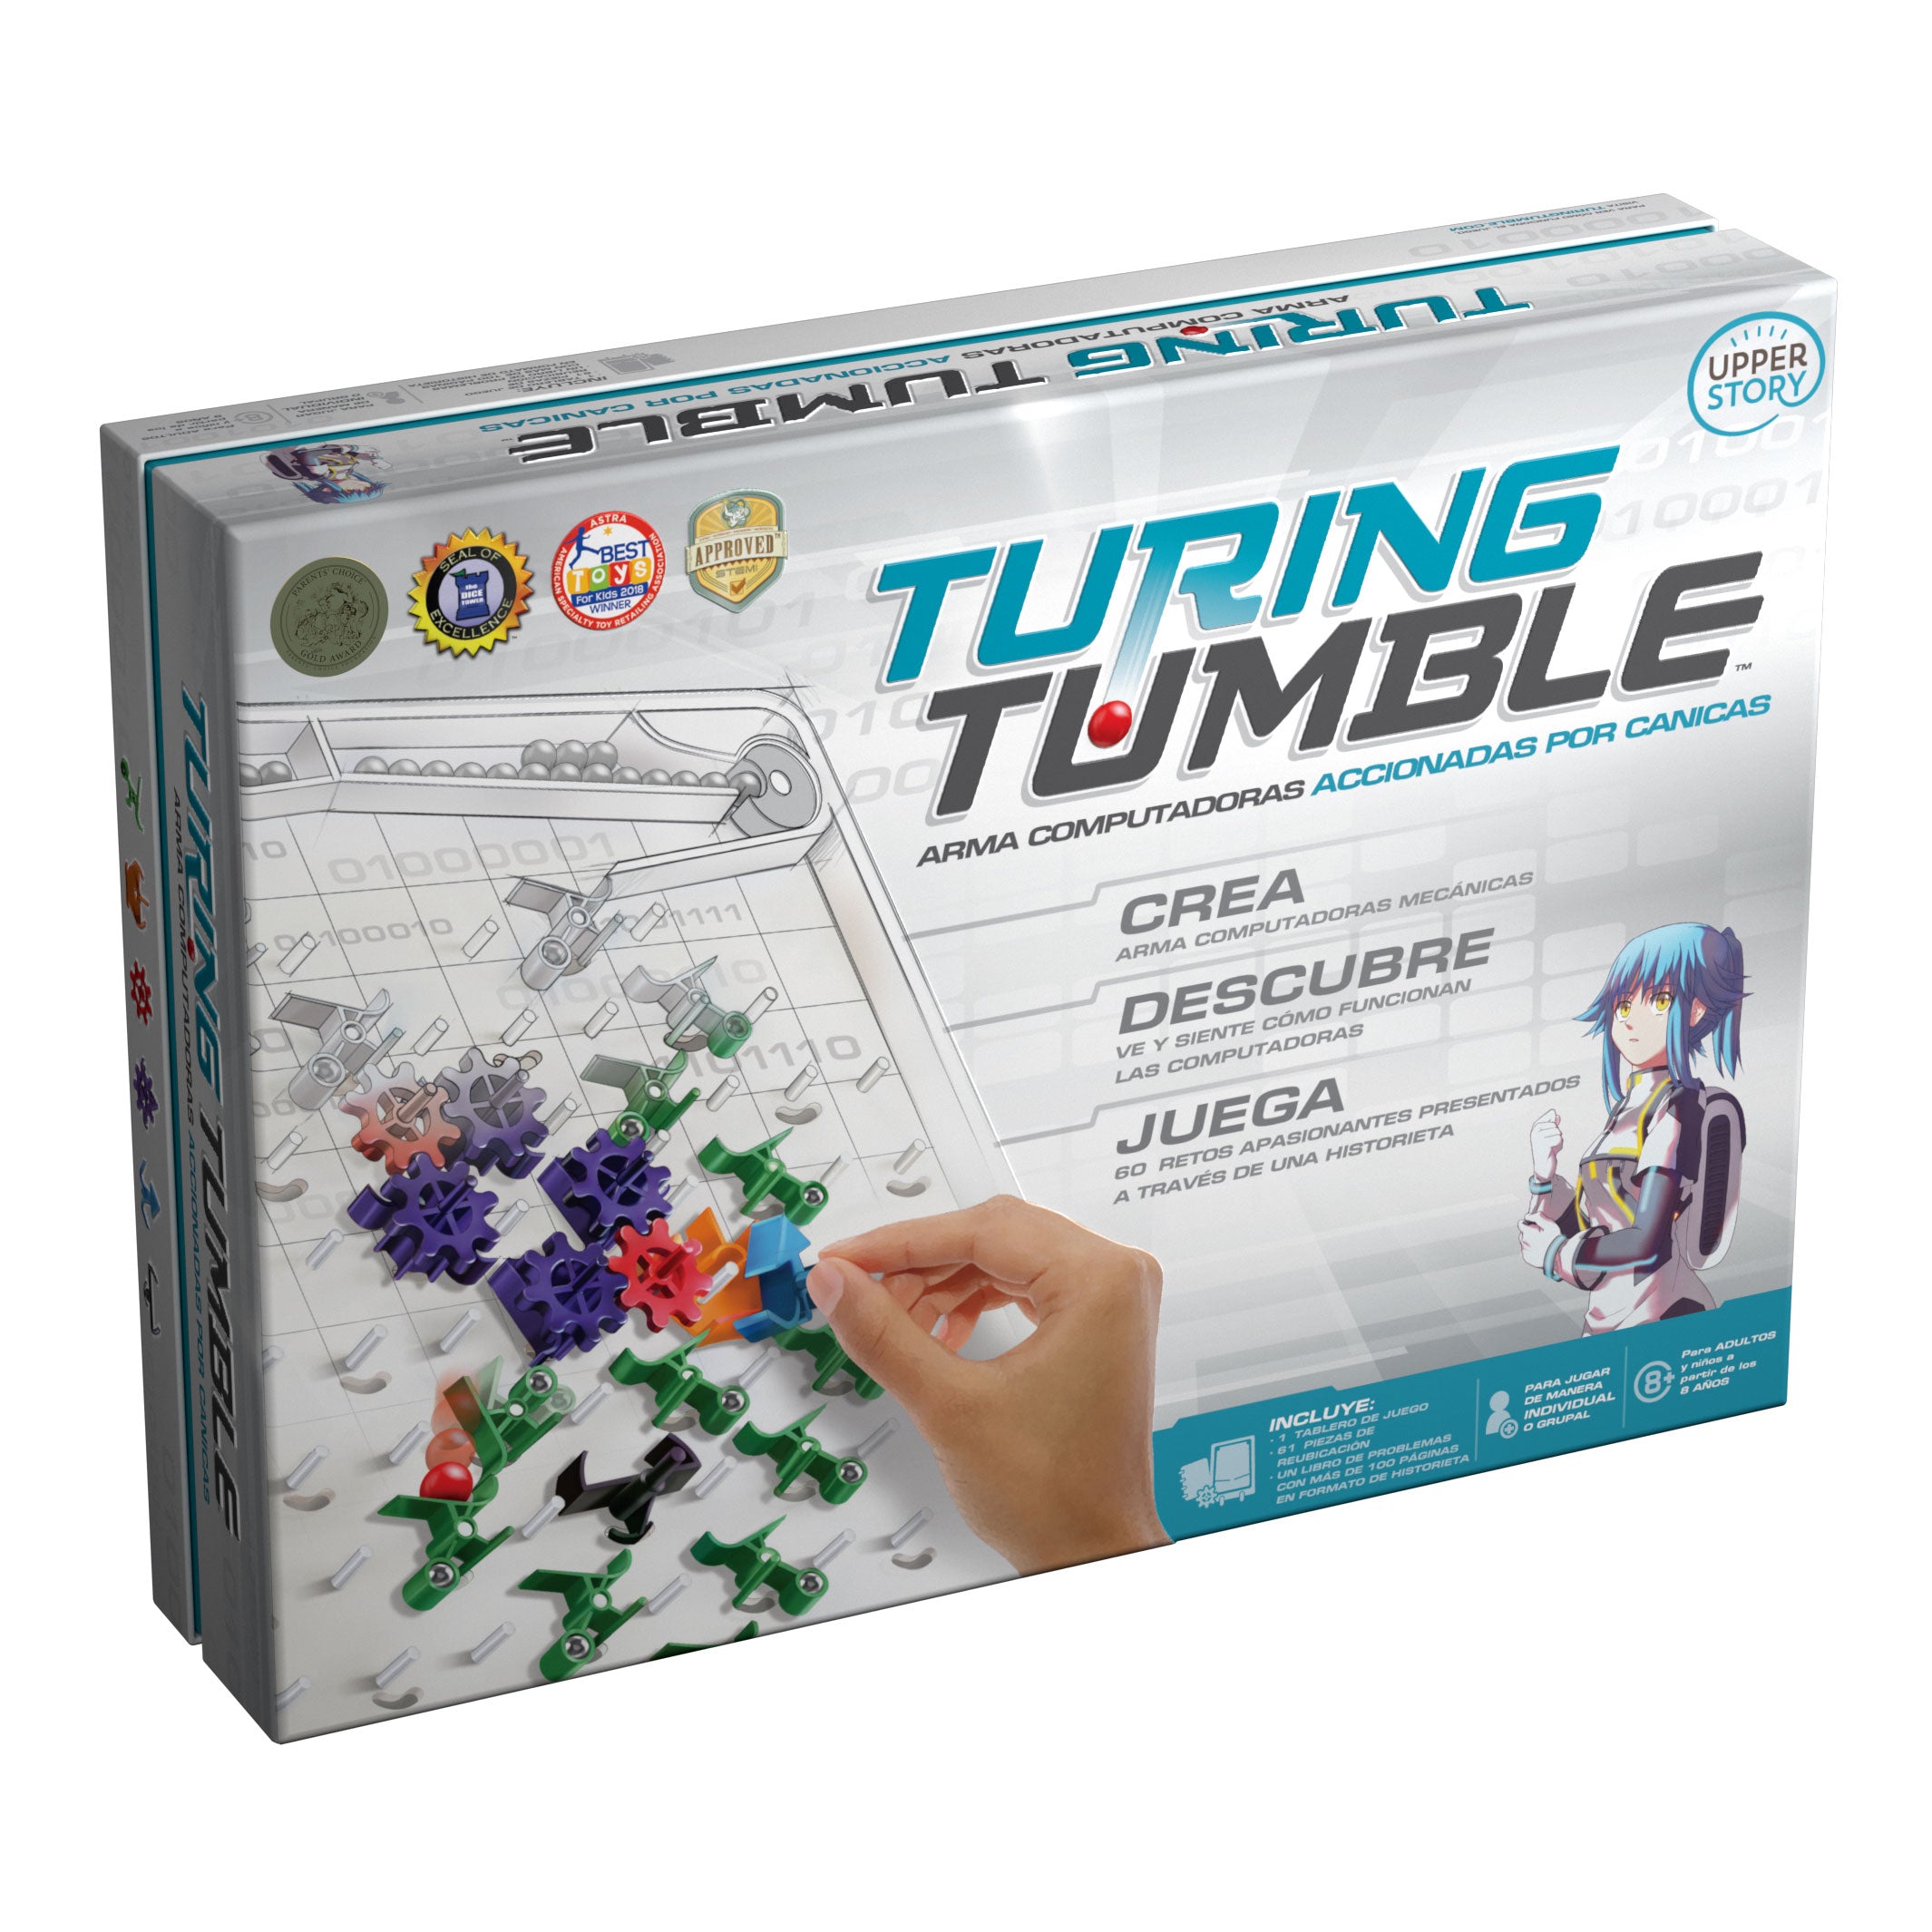 Turing Tumble – Story